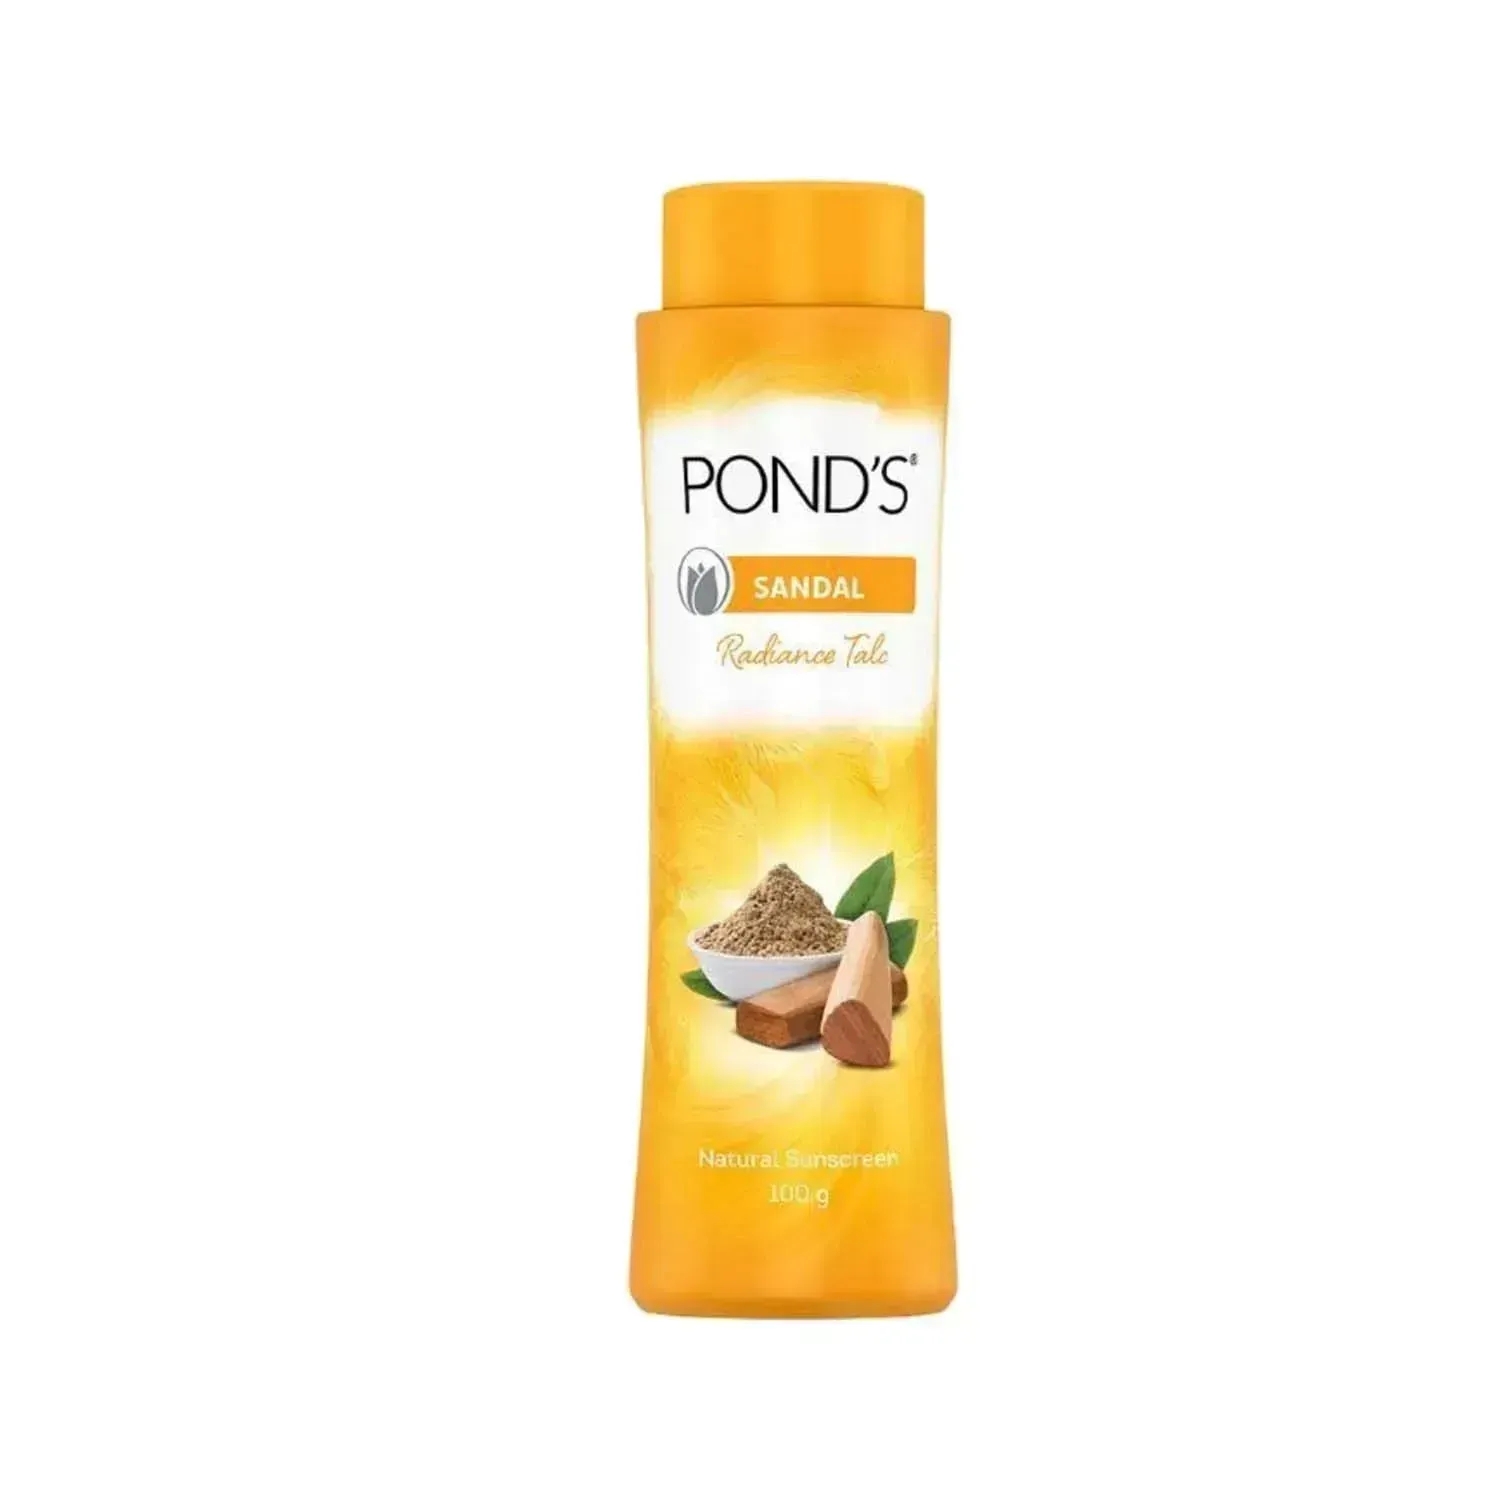 Pond's | Pond's Sandal Radiance Talcum Powder Natural Sunscreen - (100g)